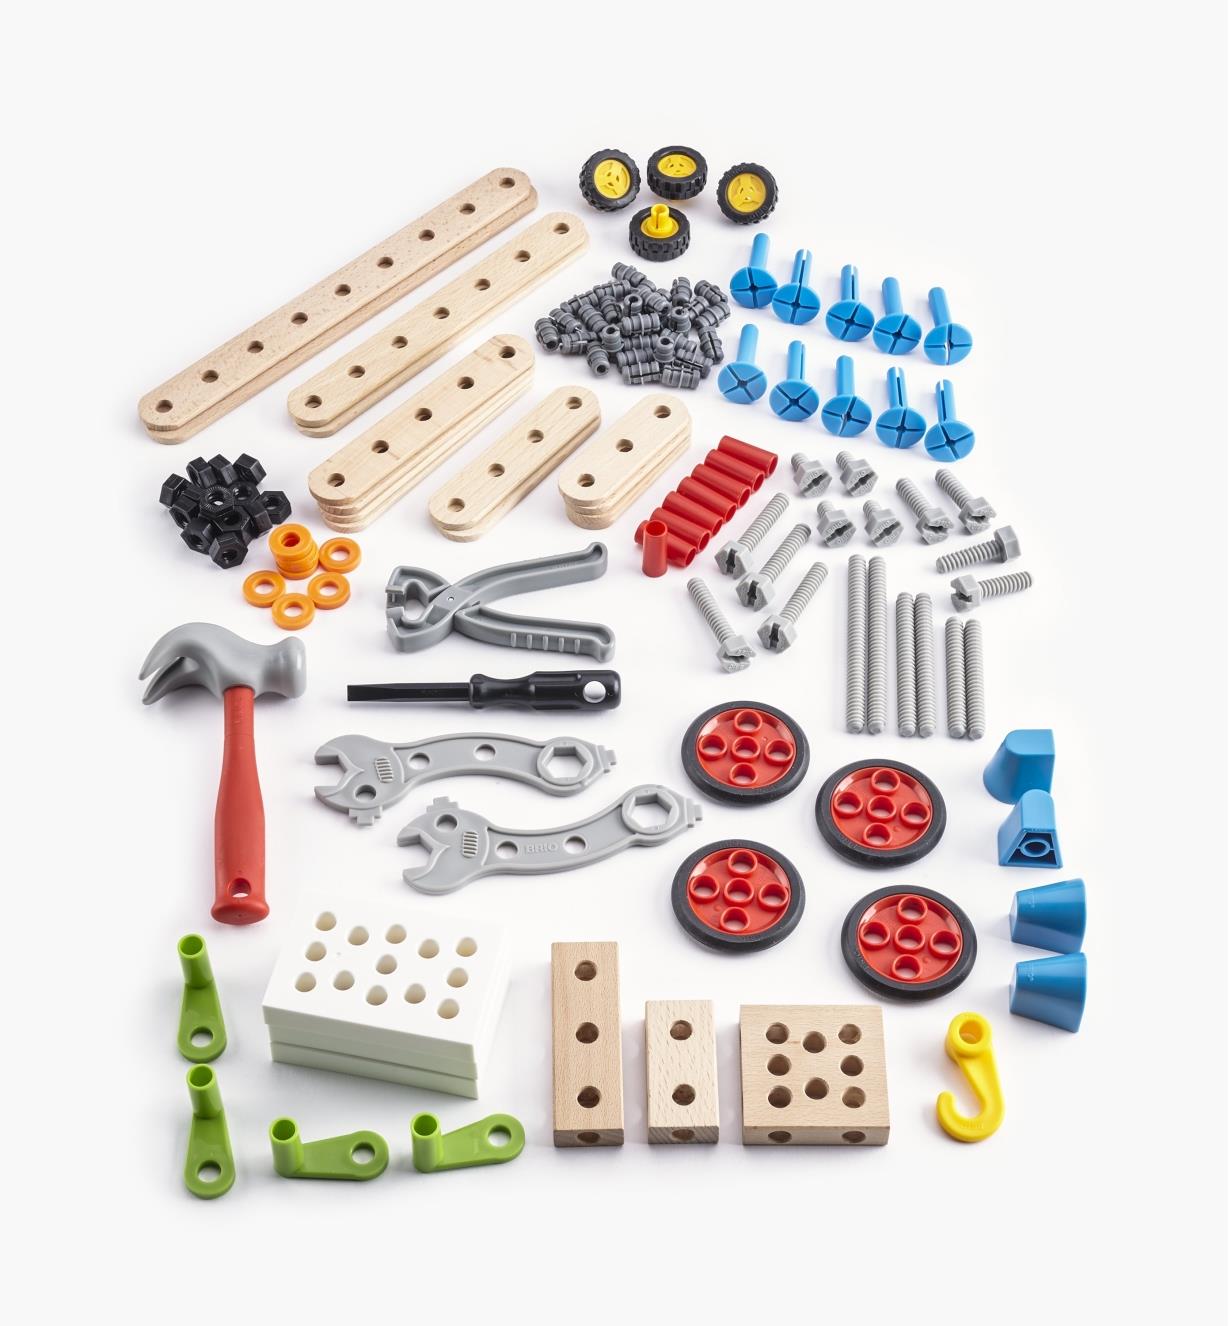 45K1592 - Brio Builder Construction Set